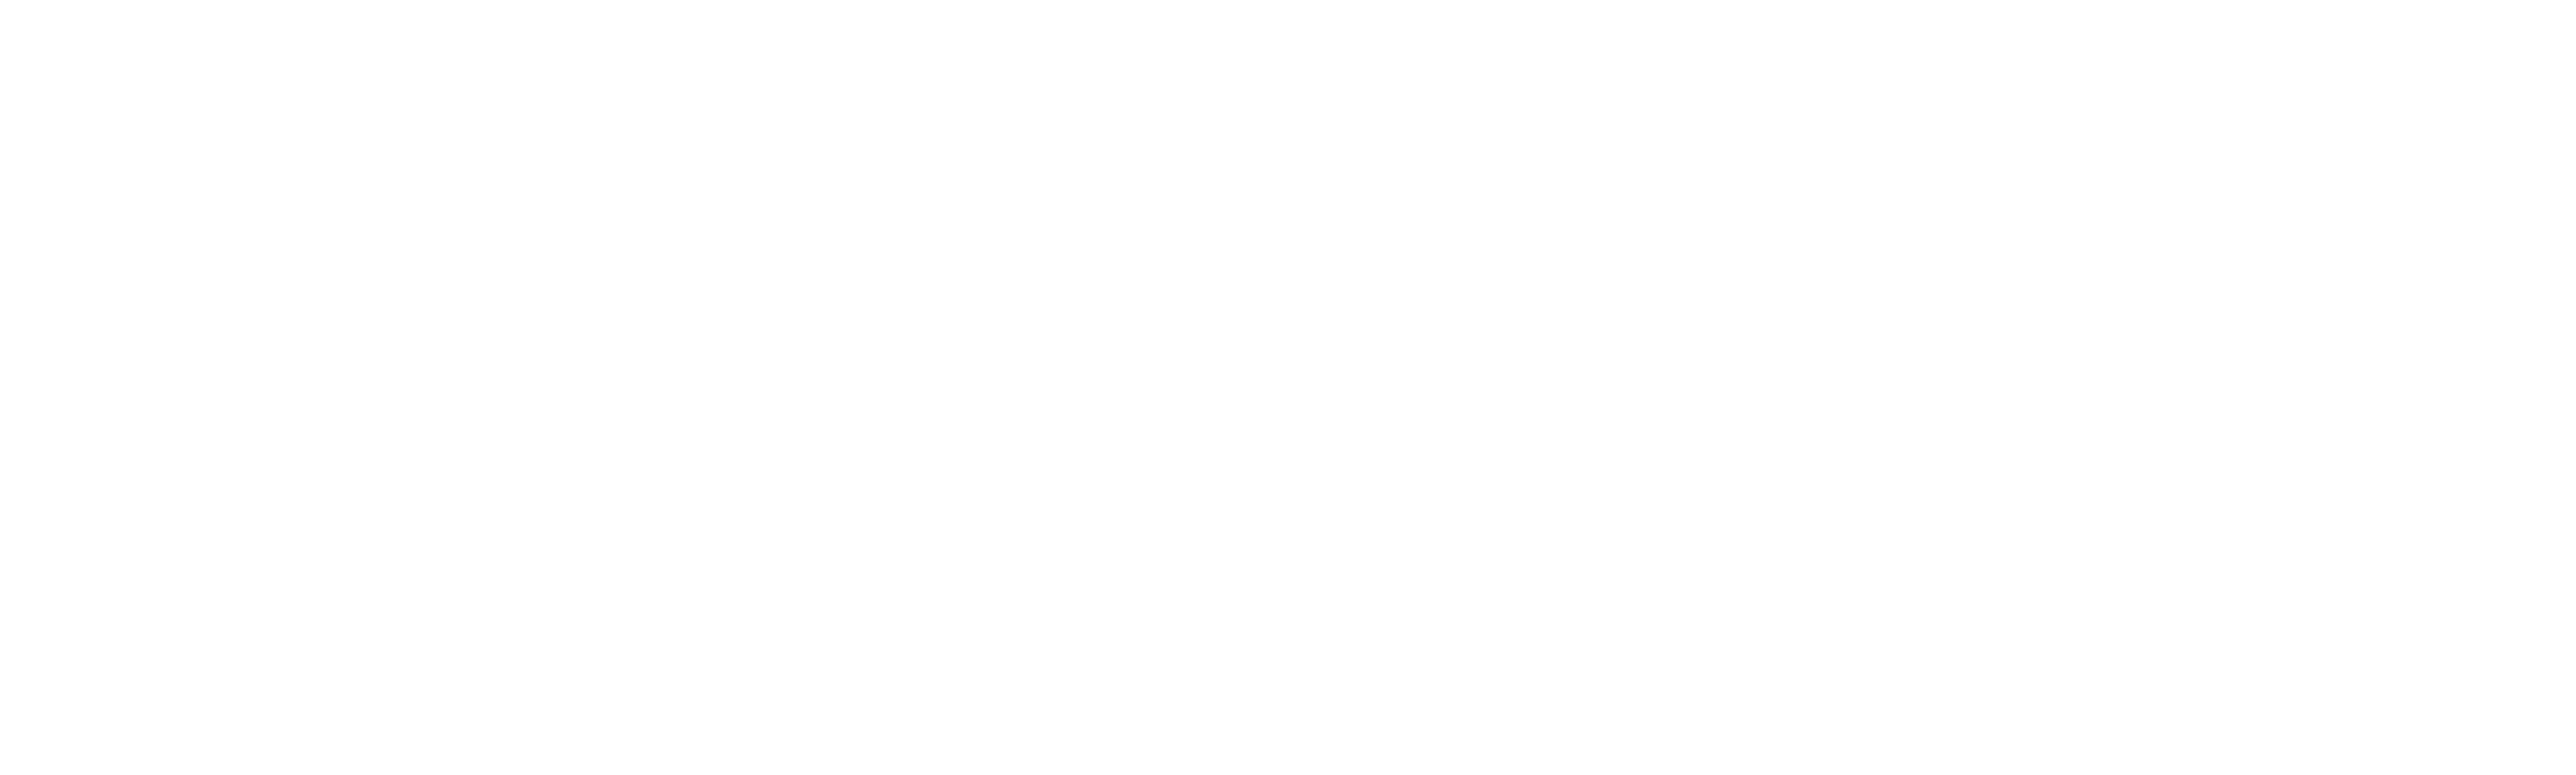 Stream Steven Universo: O Filme - Change by 𝑯𝒆𝒍𝒍𝒐𝒖